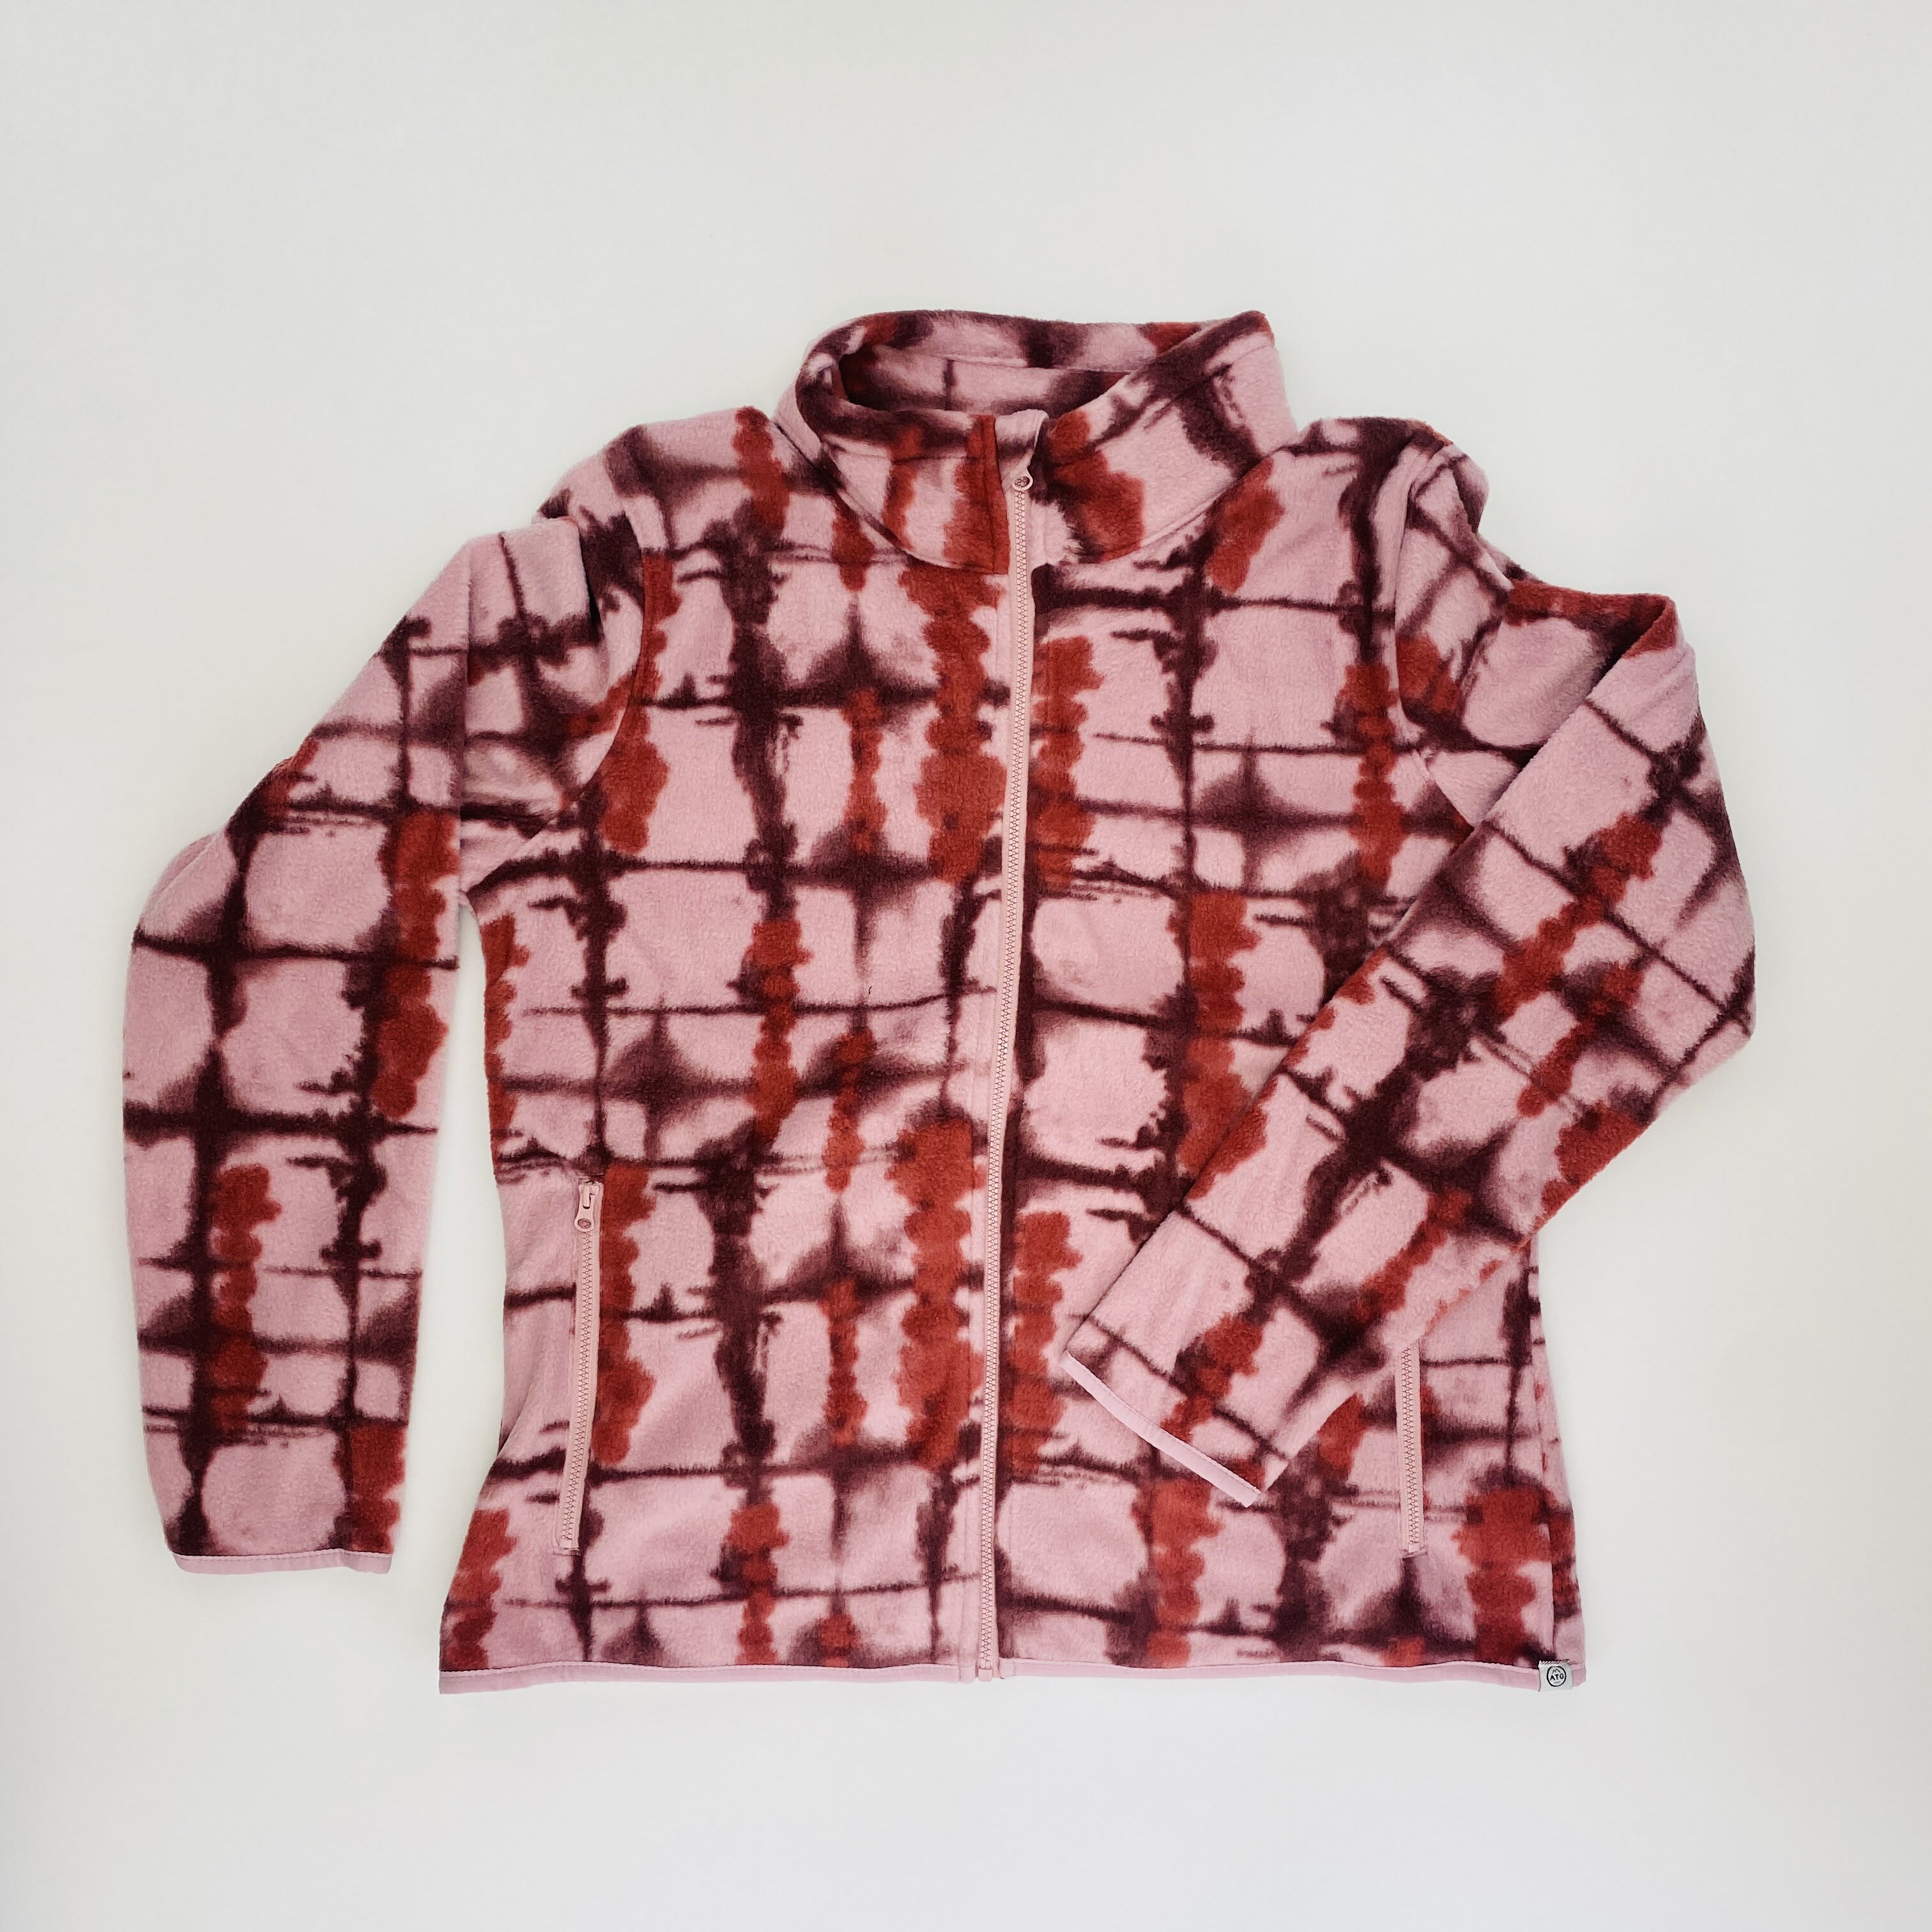 Wrangler Full Zip Fleece Jacket - Giacca in pile di seconda mano - Donna - Rosa - M | Hardloop